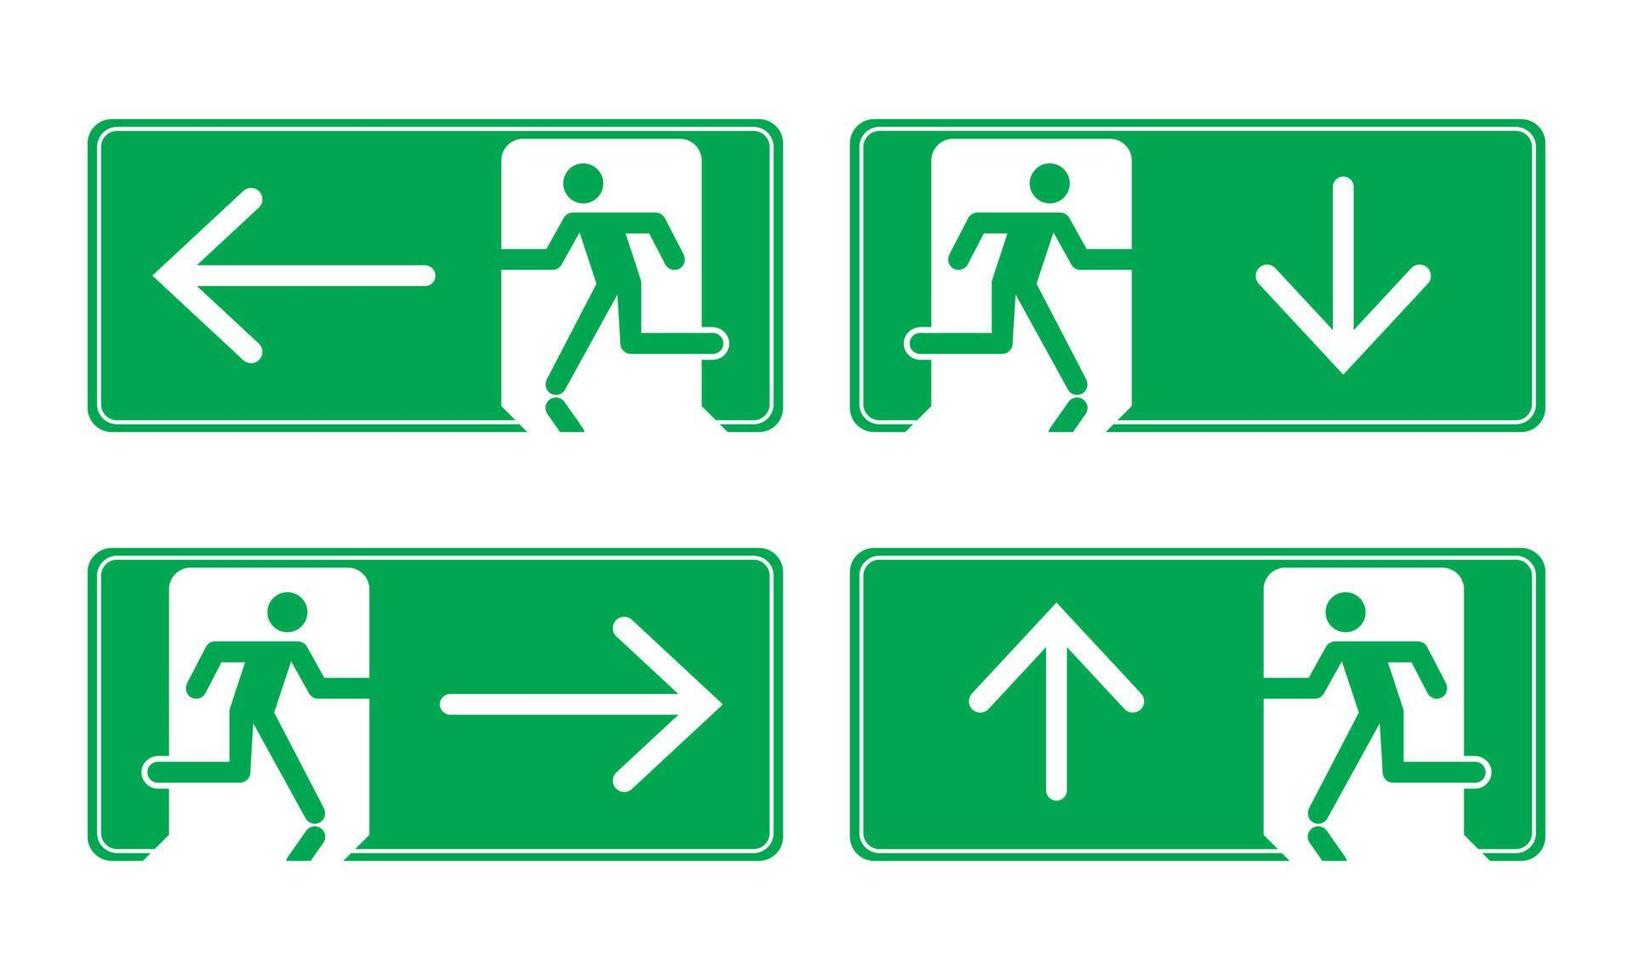 grön utgång nödsituation tecken. vektor illustration